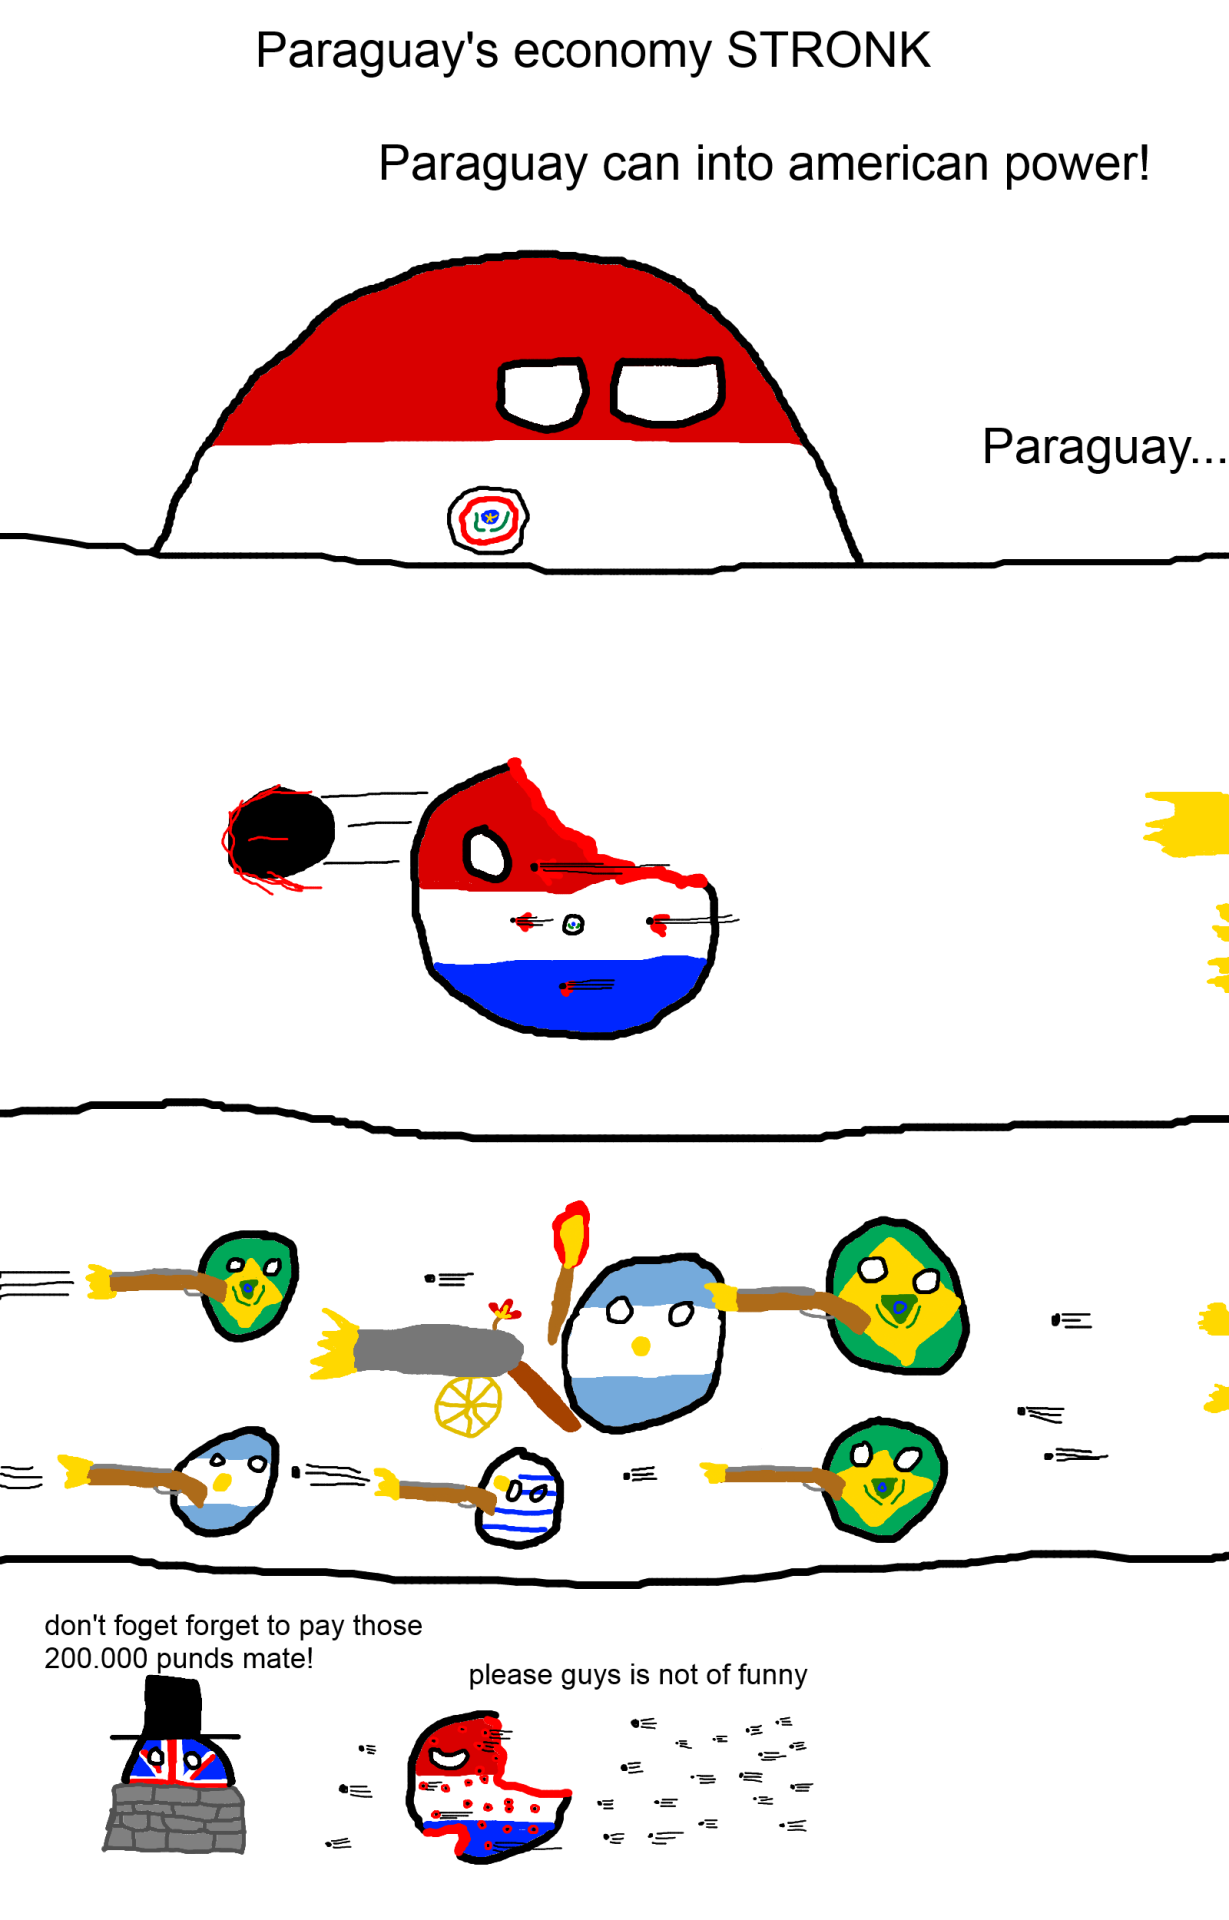 tumblr search user great power Polandball  into Paraguay can